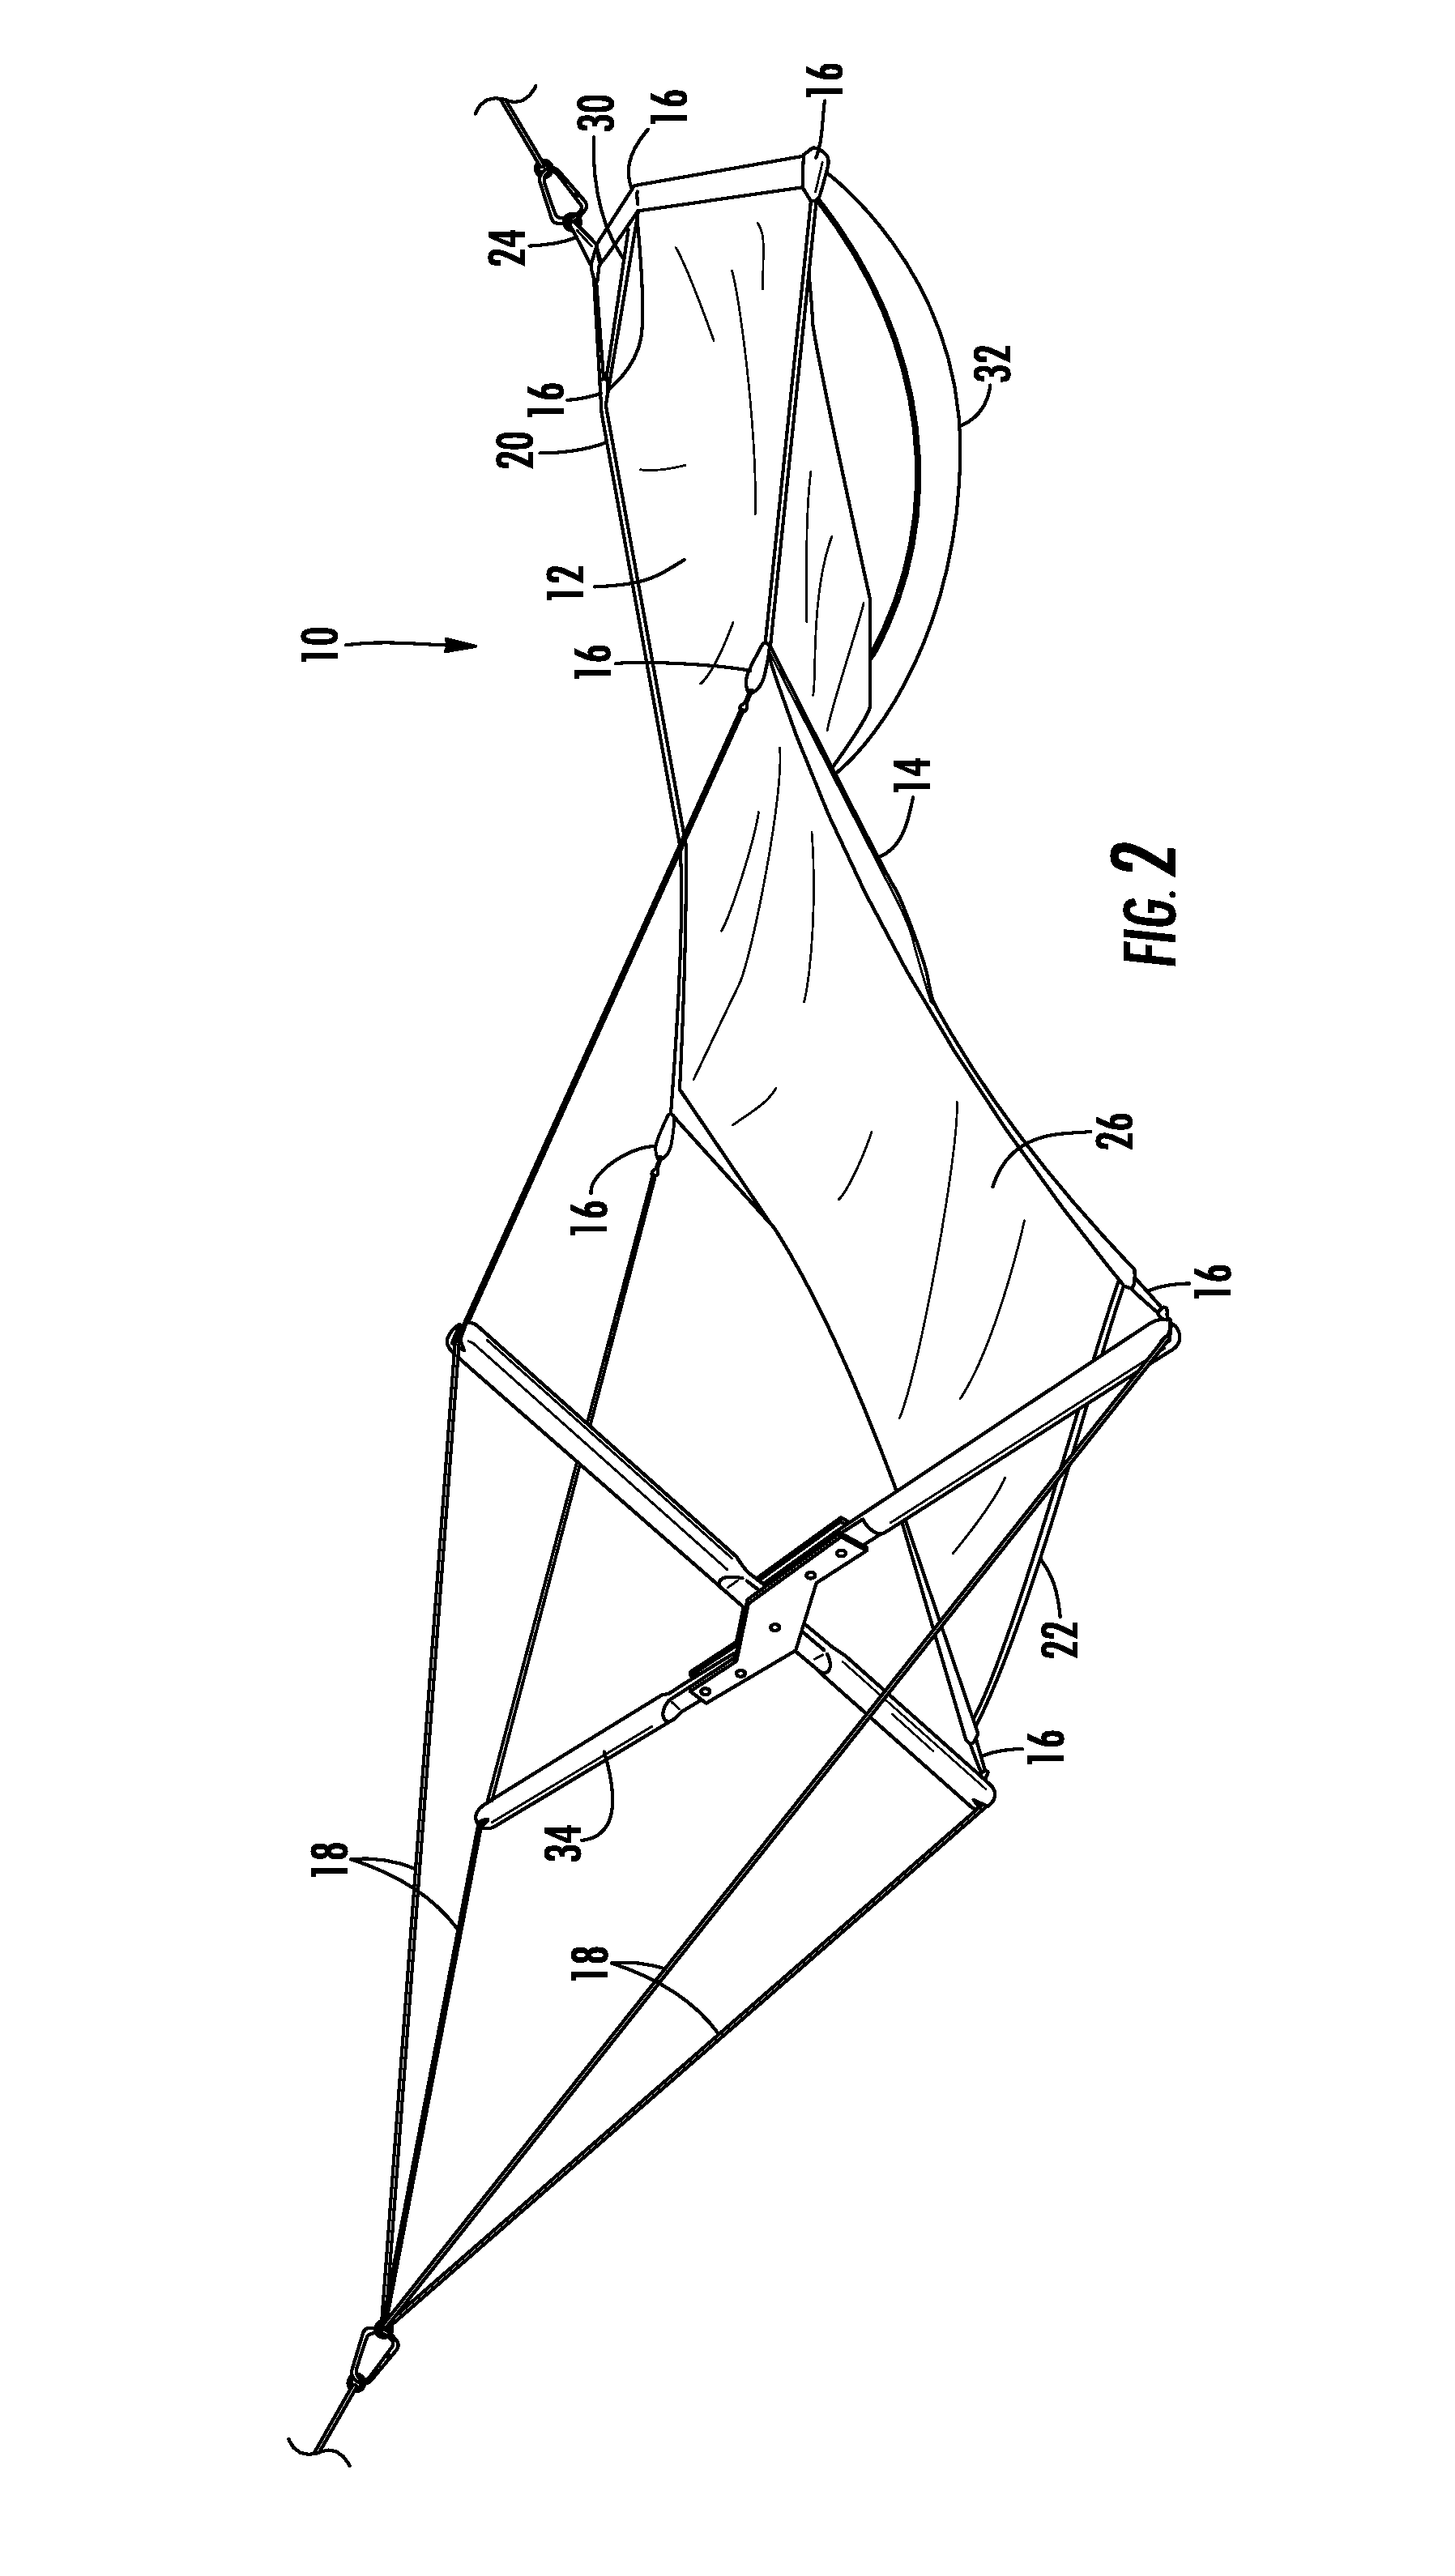 Hammock with quadrecline geometry